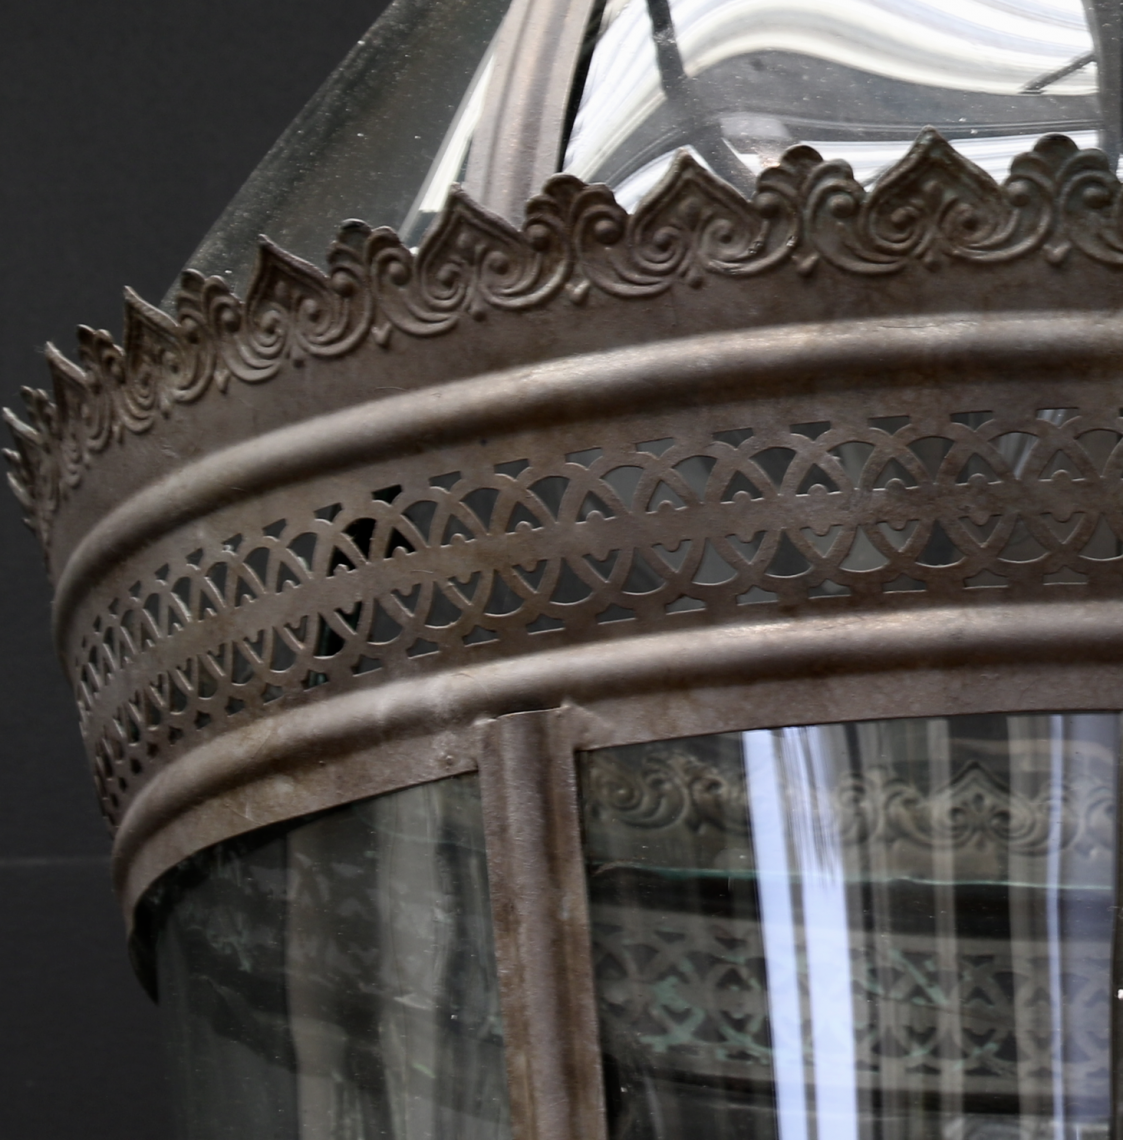 Dome Top Lantern / Antique Brass